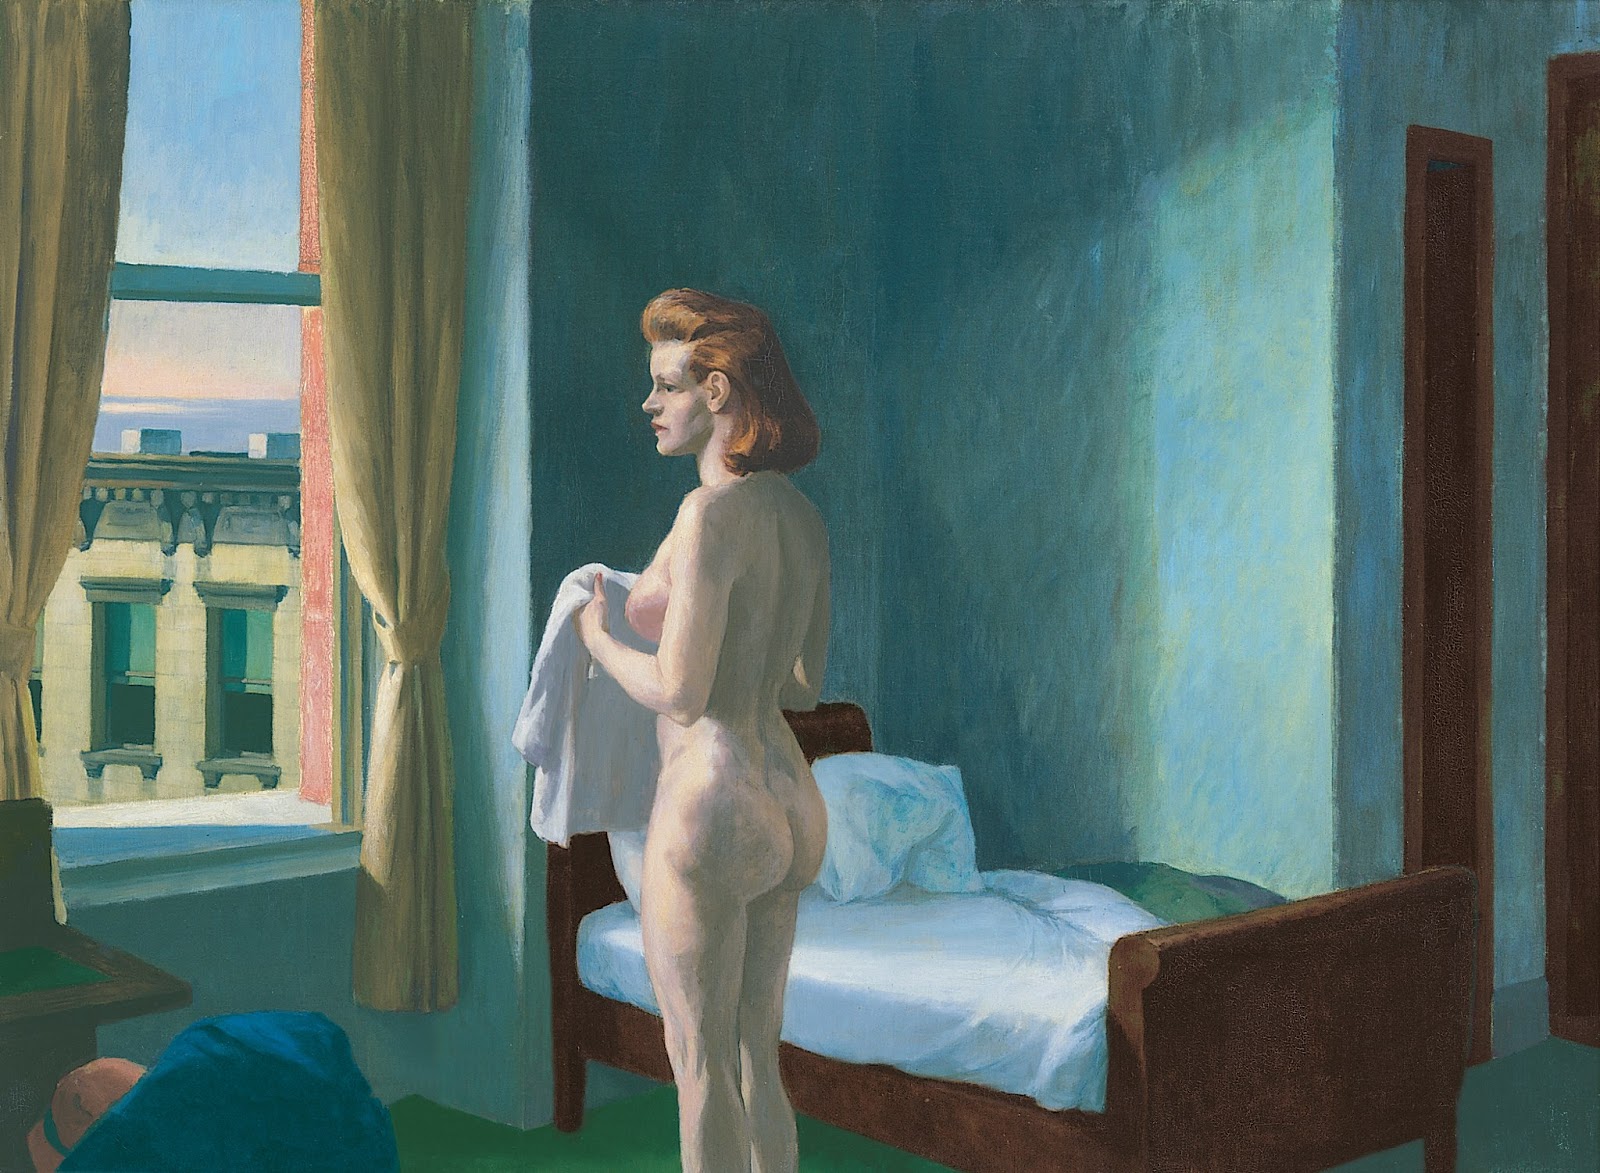 Edward+Hopper-1882-1967 (160).jpg